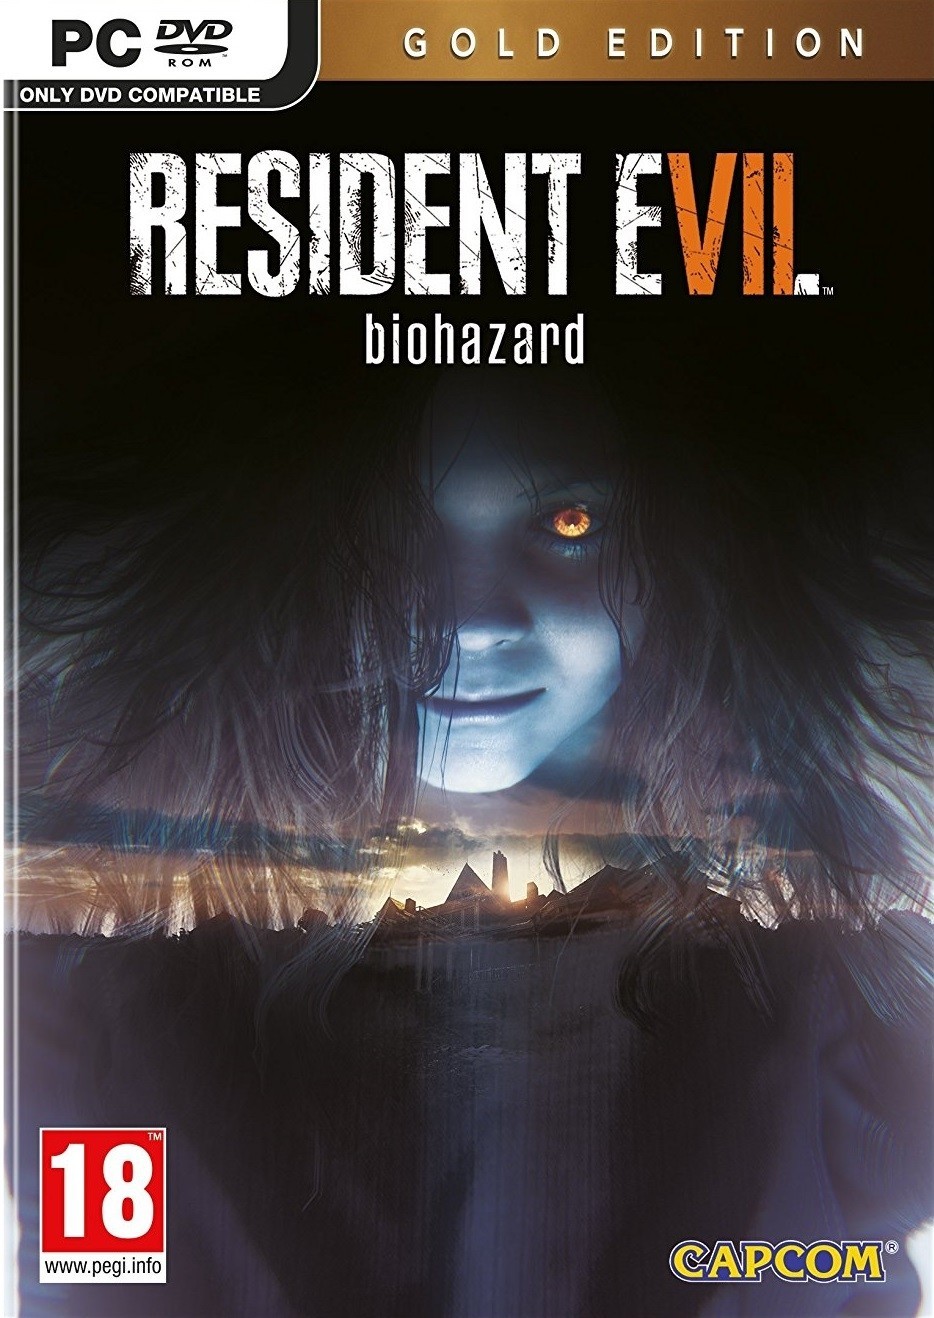 Resident Evil 7: Biohazard (Gold Edition) (PC), Capcom